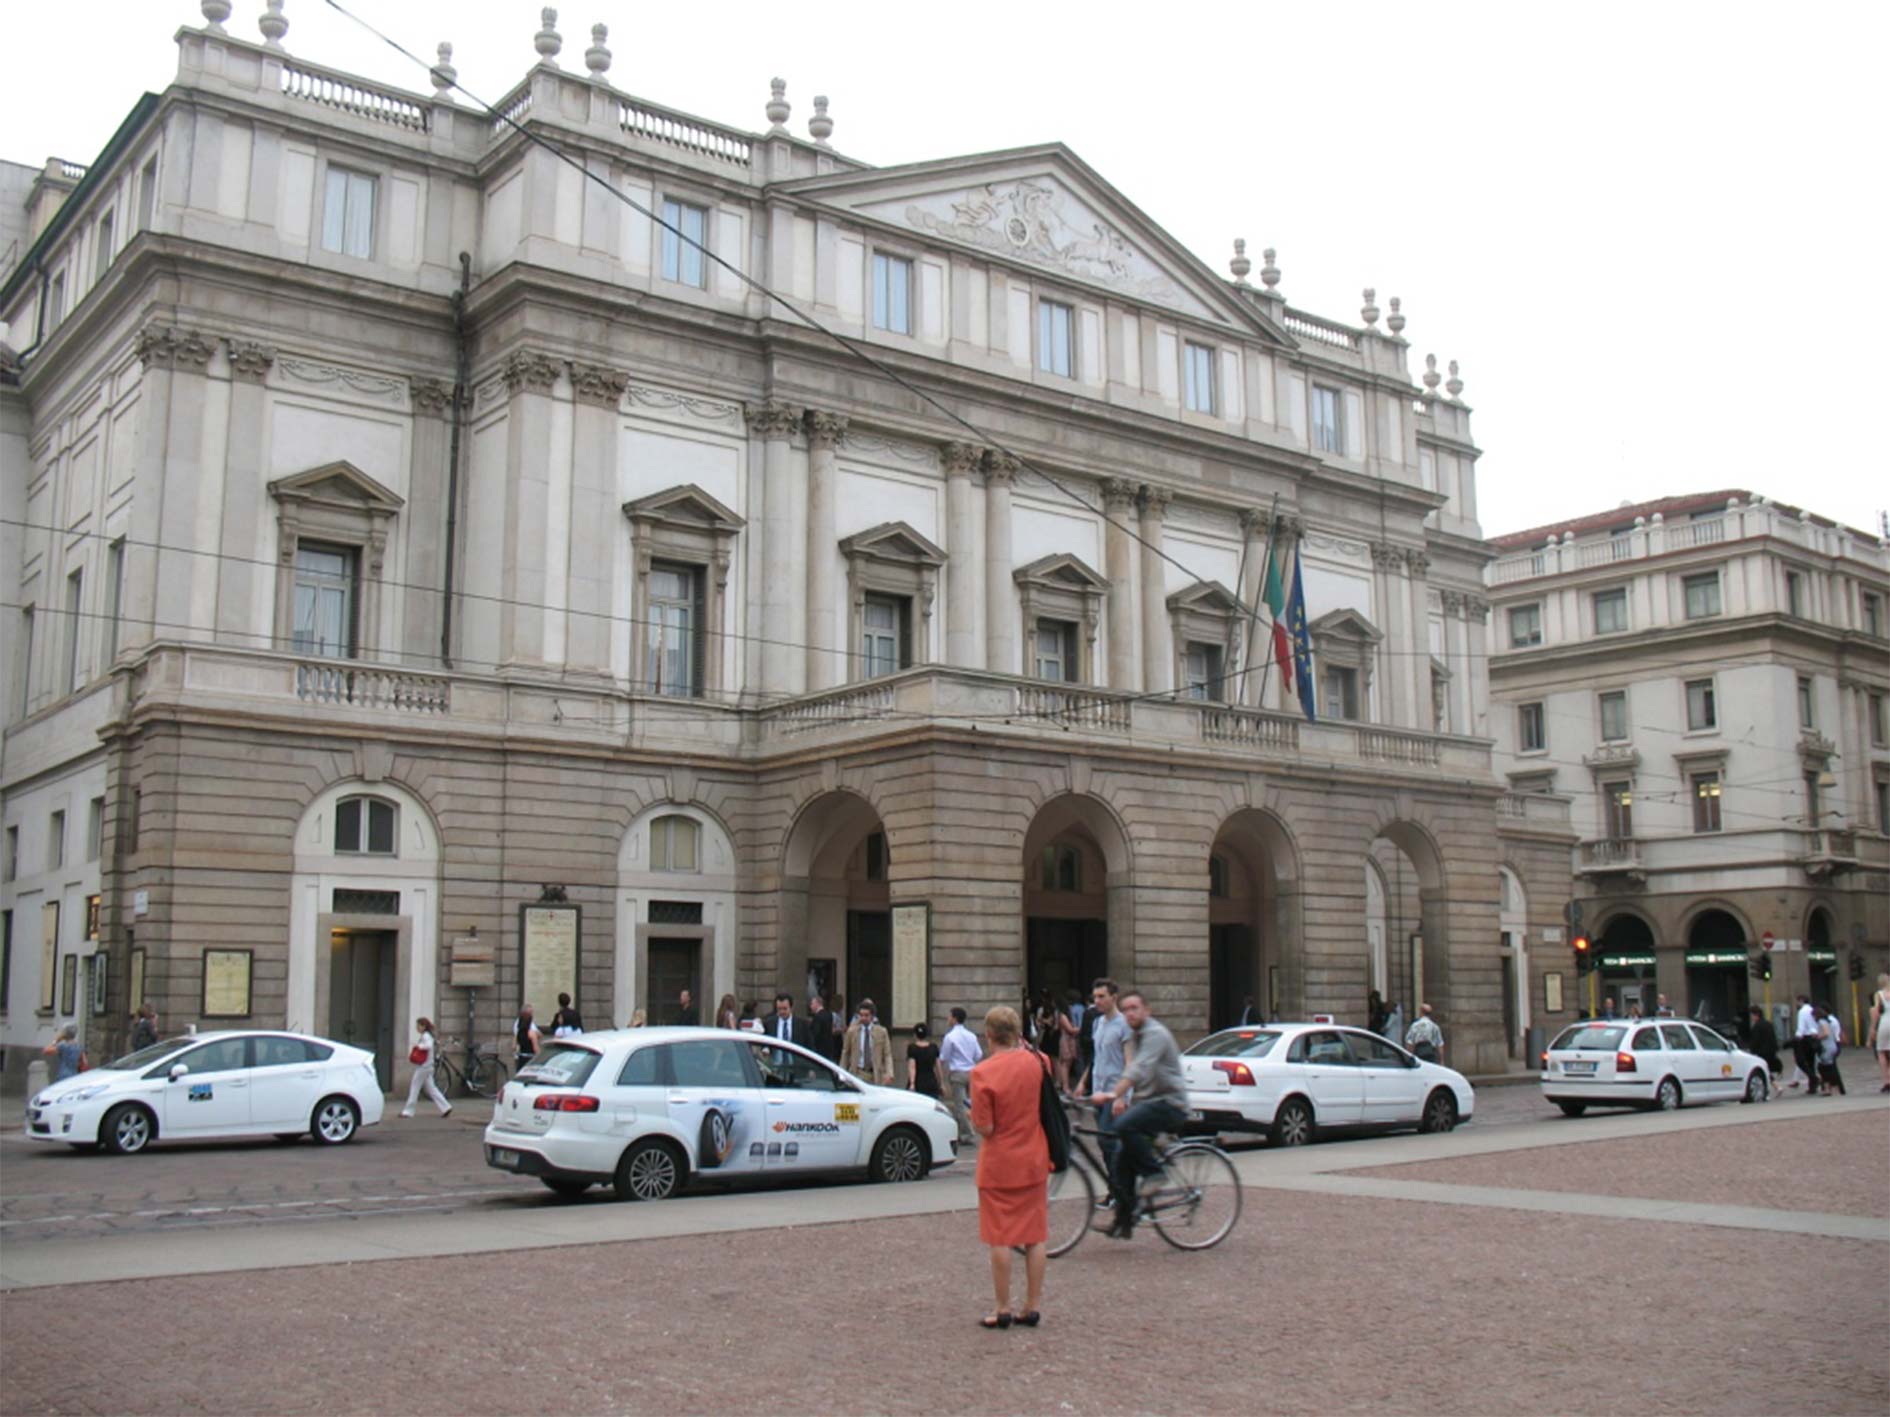 The La Scala opera house